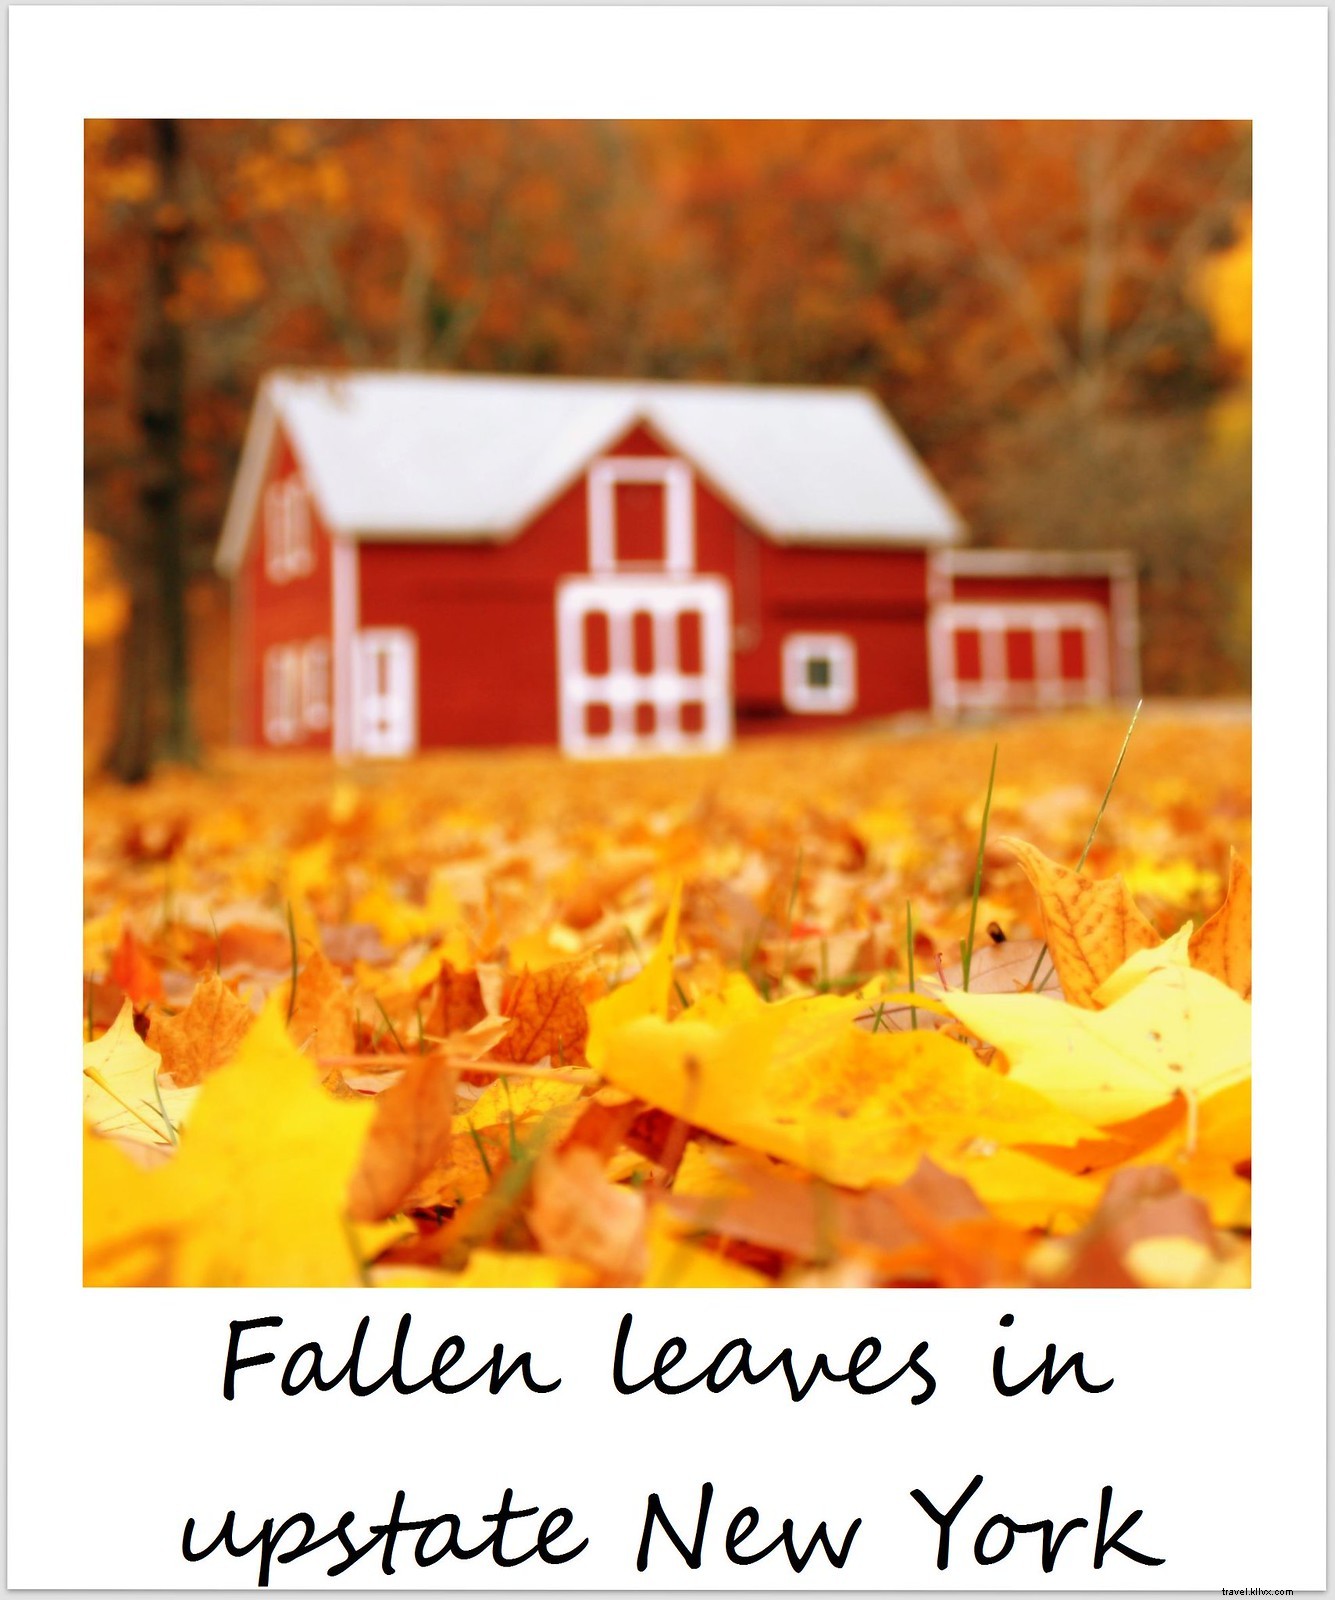 Polaroid minggu ini:Dedaunan musim gugur di Upstate New York